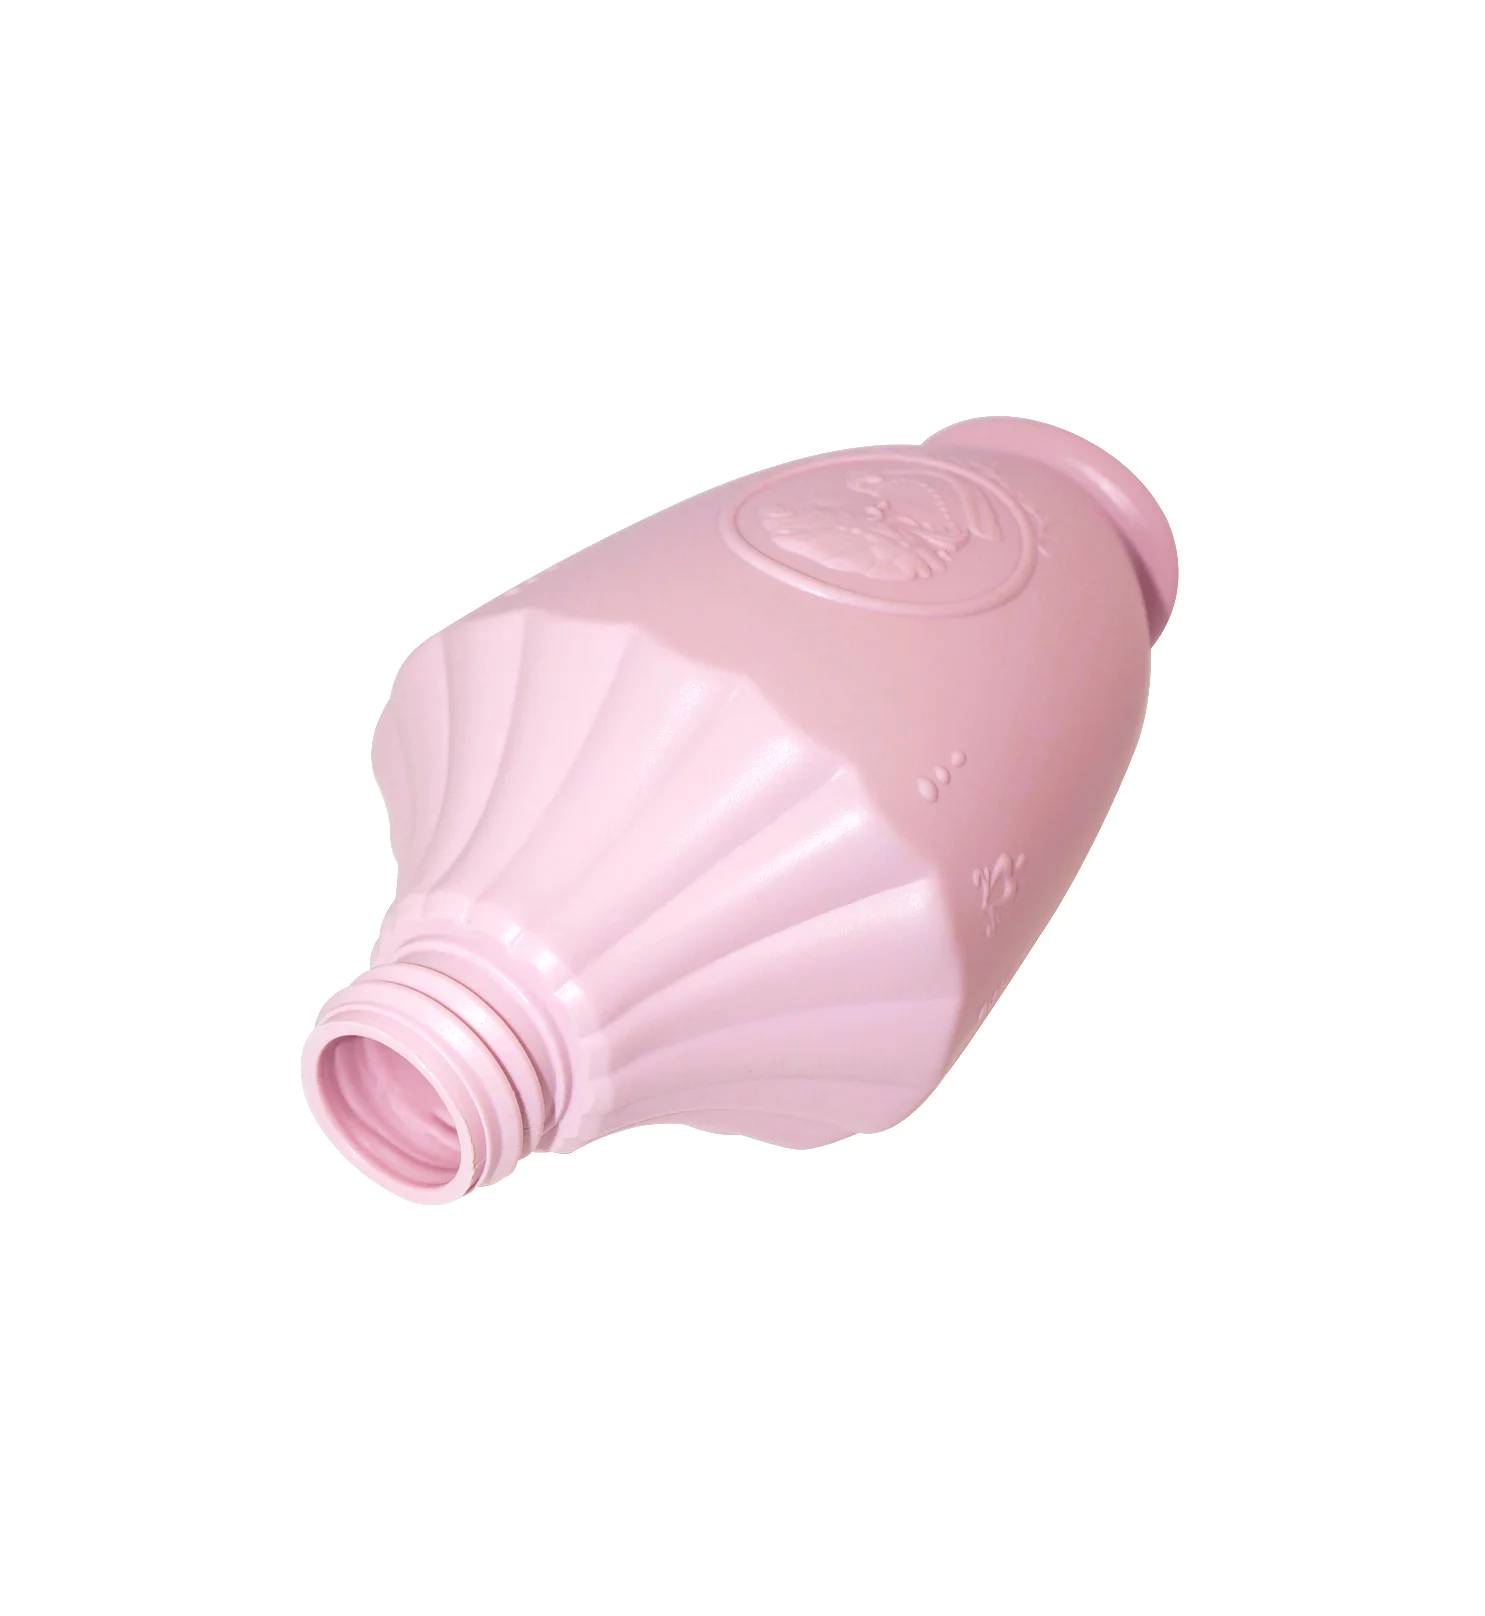 China wholesale custom design 500ml plastic empty shampoo bottles with aluminum covered lotion pump